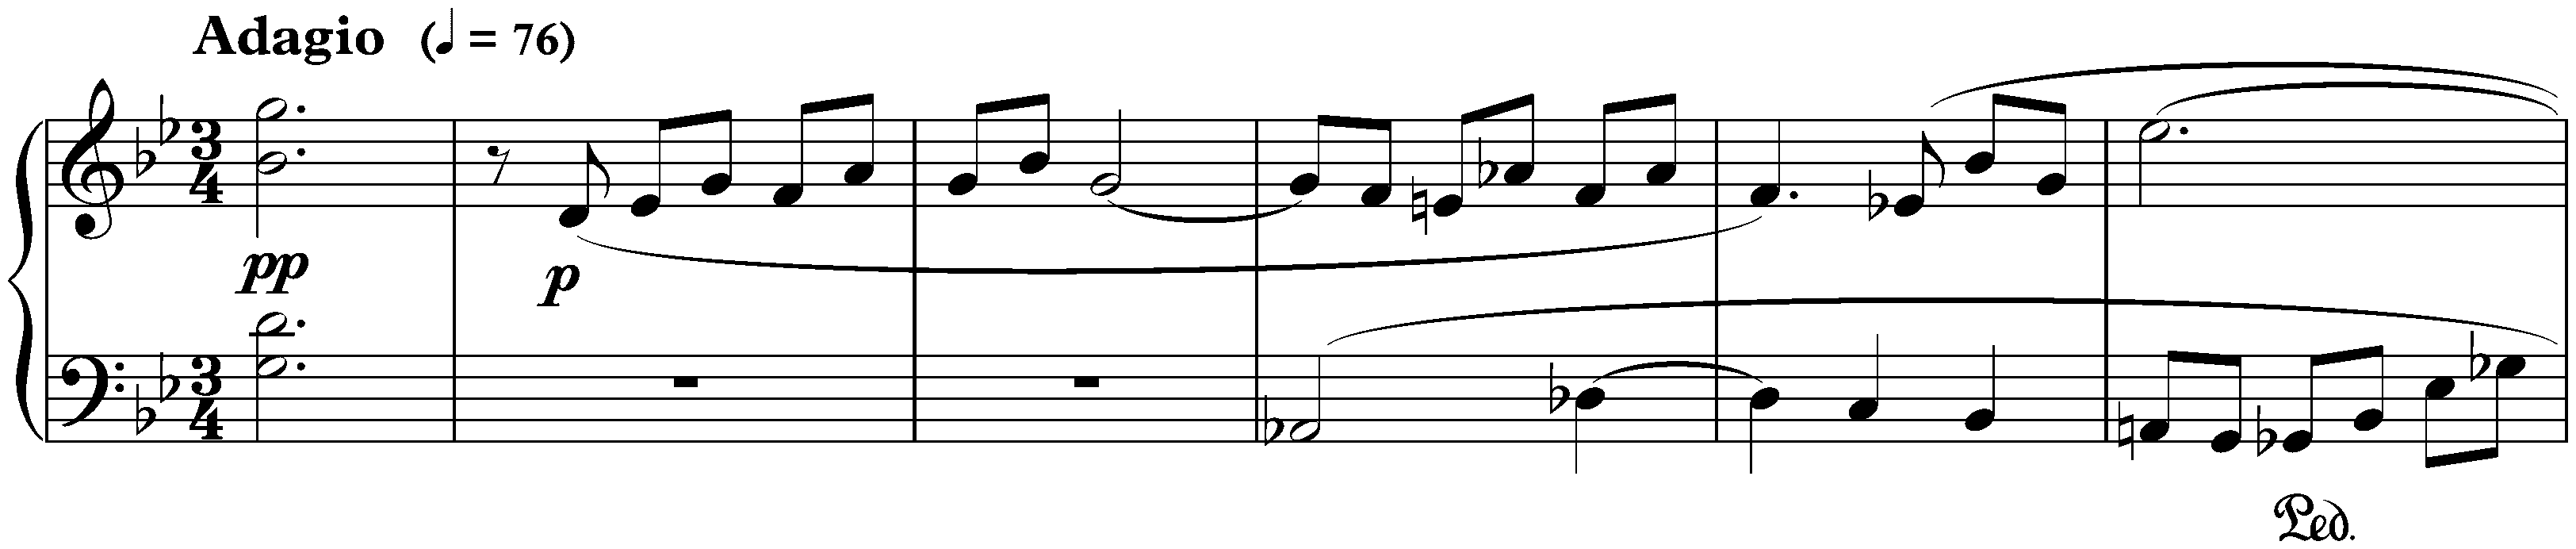 Twenty-four Preludes, op. 34; 22. G minor